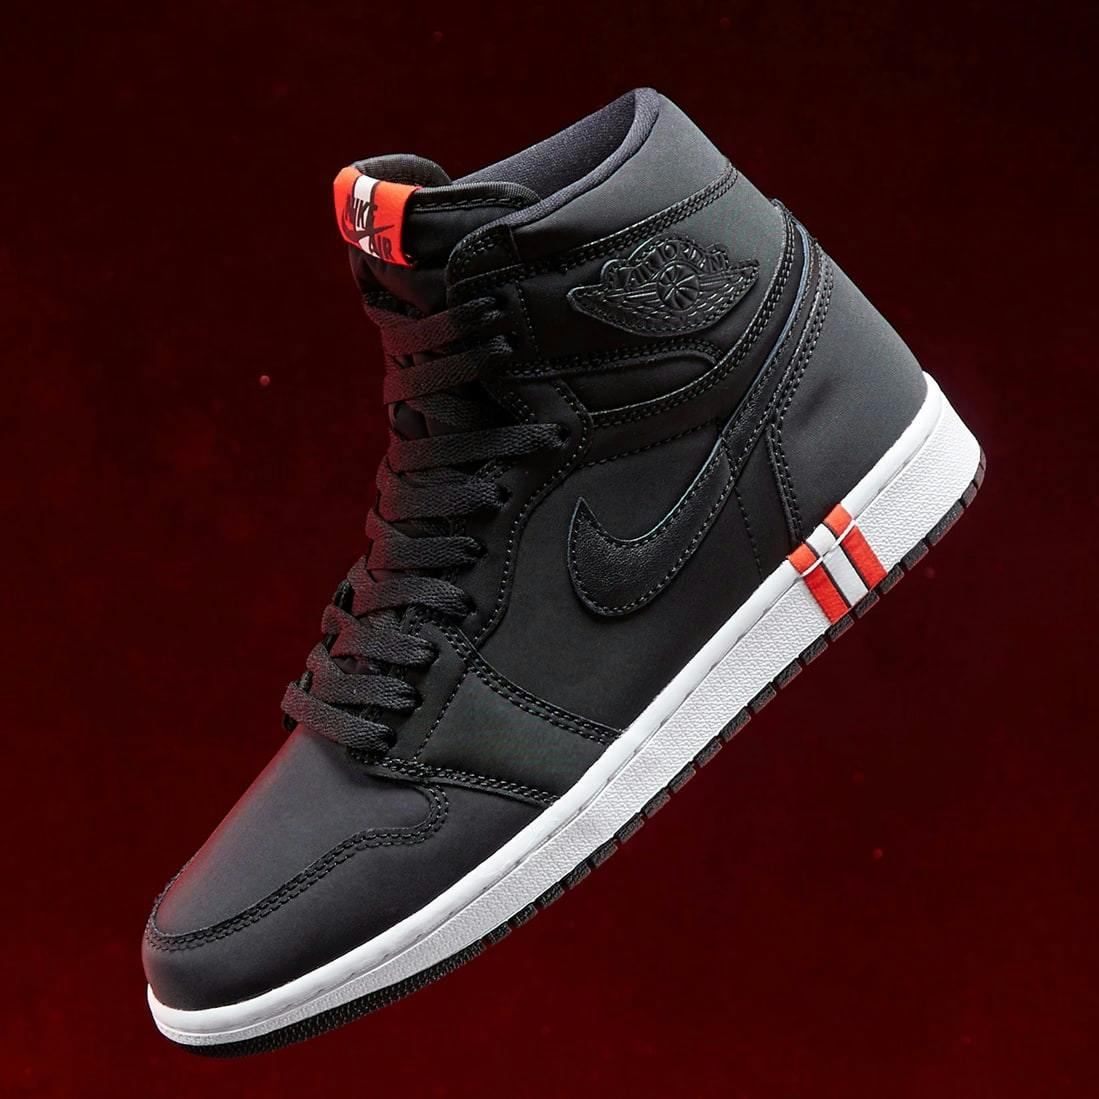 fe tonehøjde let at blive såret END. Features | Nike Air Jordan 1 Retro High OG BCFC - Register Now on END.  Launches